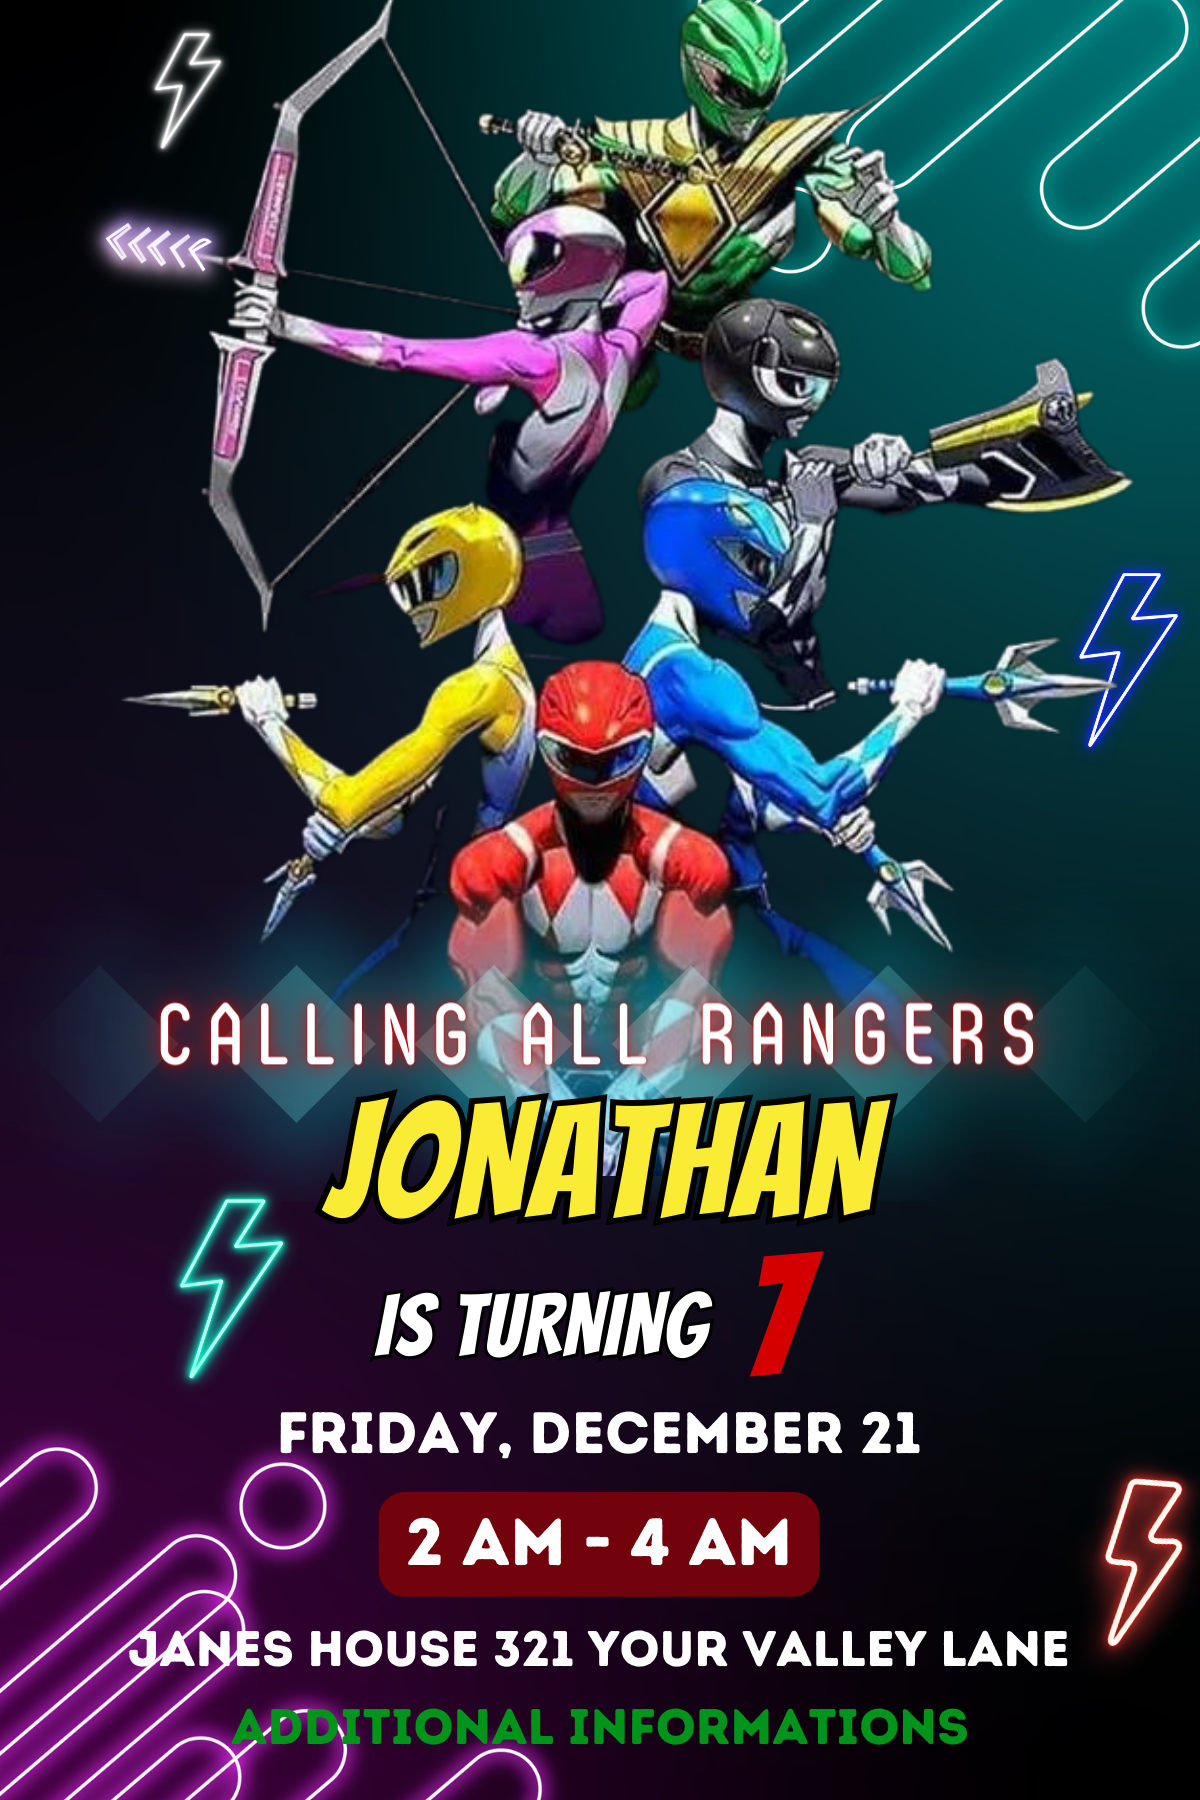 Personalized Power Ranger Kid's Birthday Invitation Template